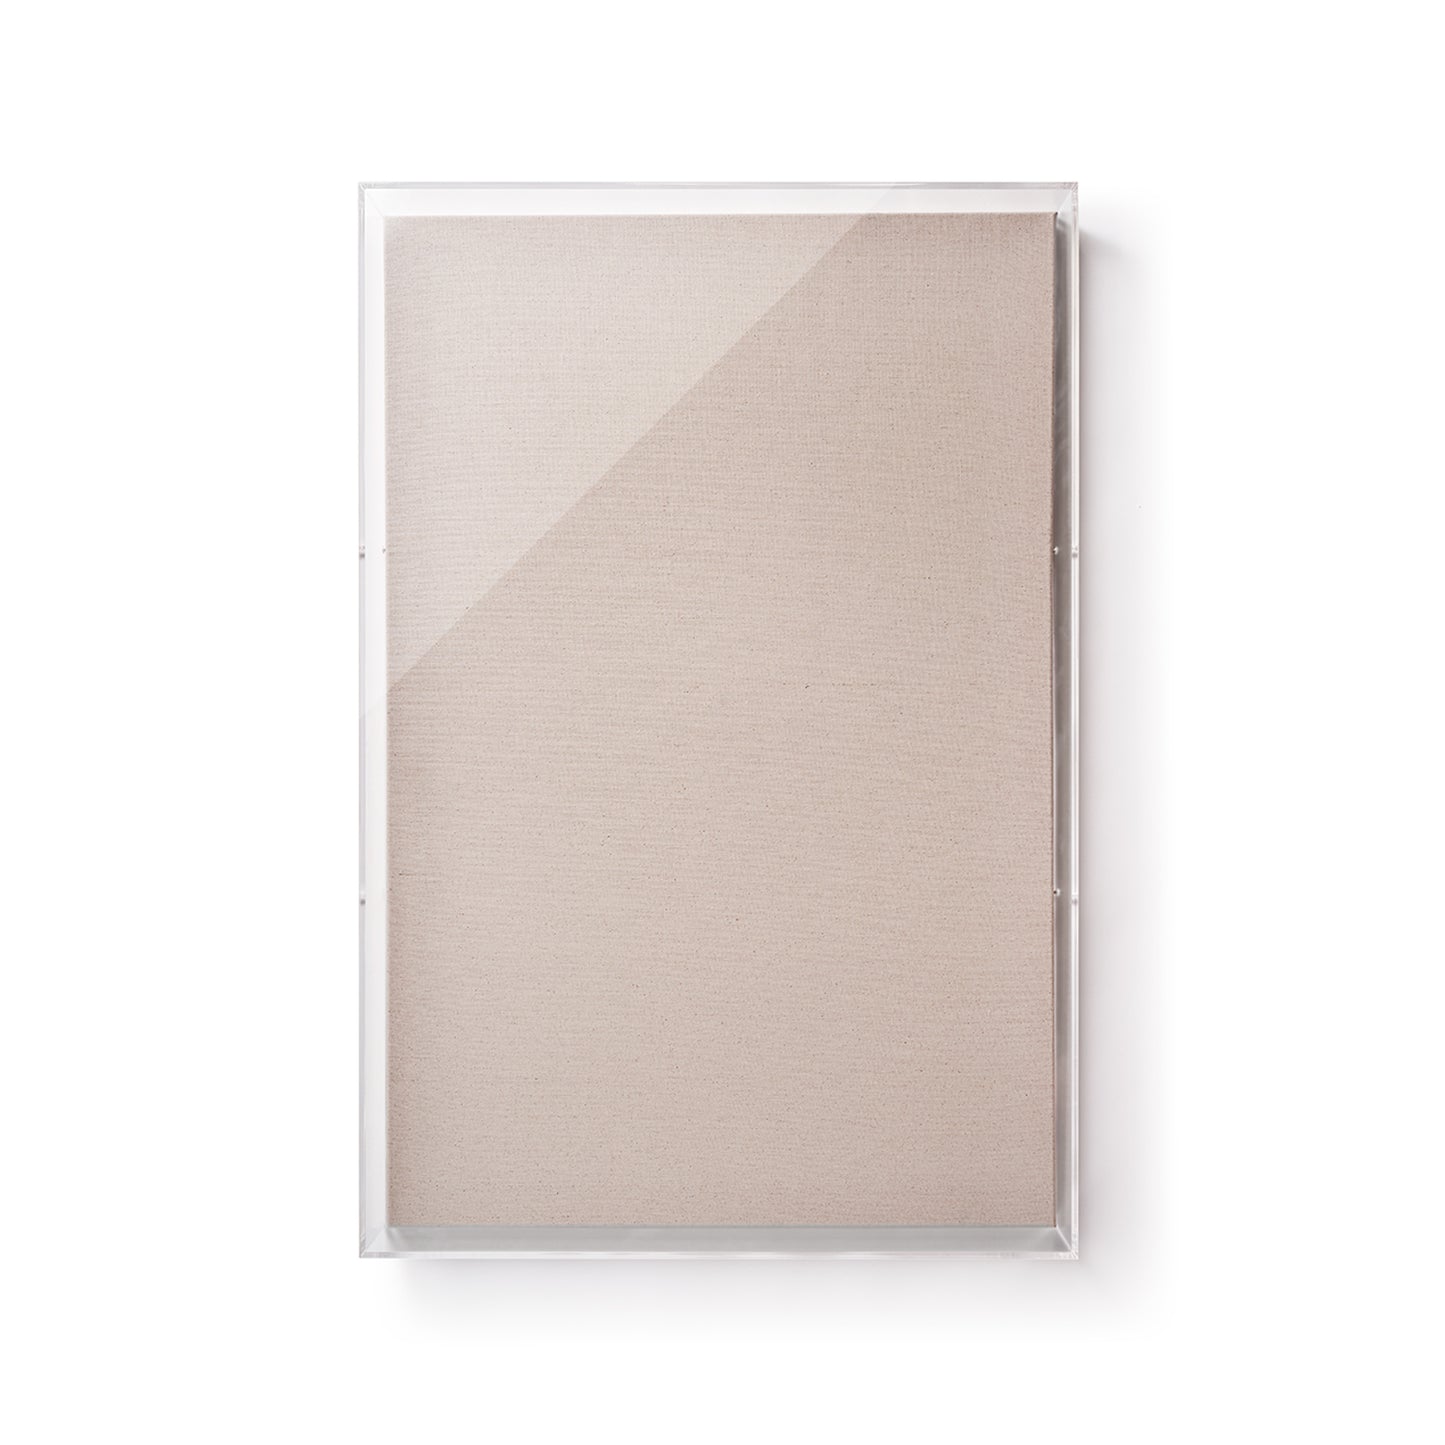 24" x 36" x 3" Modern Acrylic Shadowbox with Linen Canvas - UV Grade